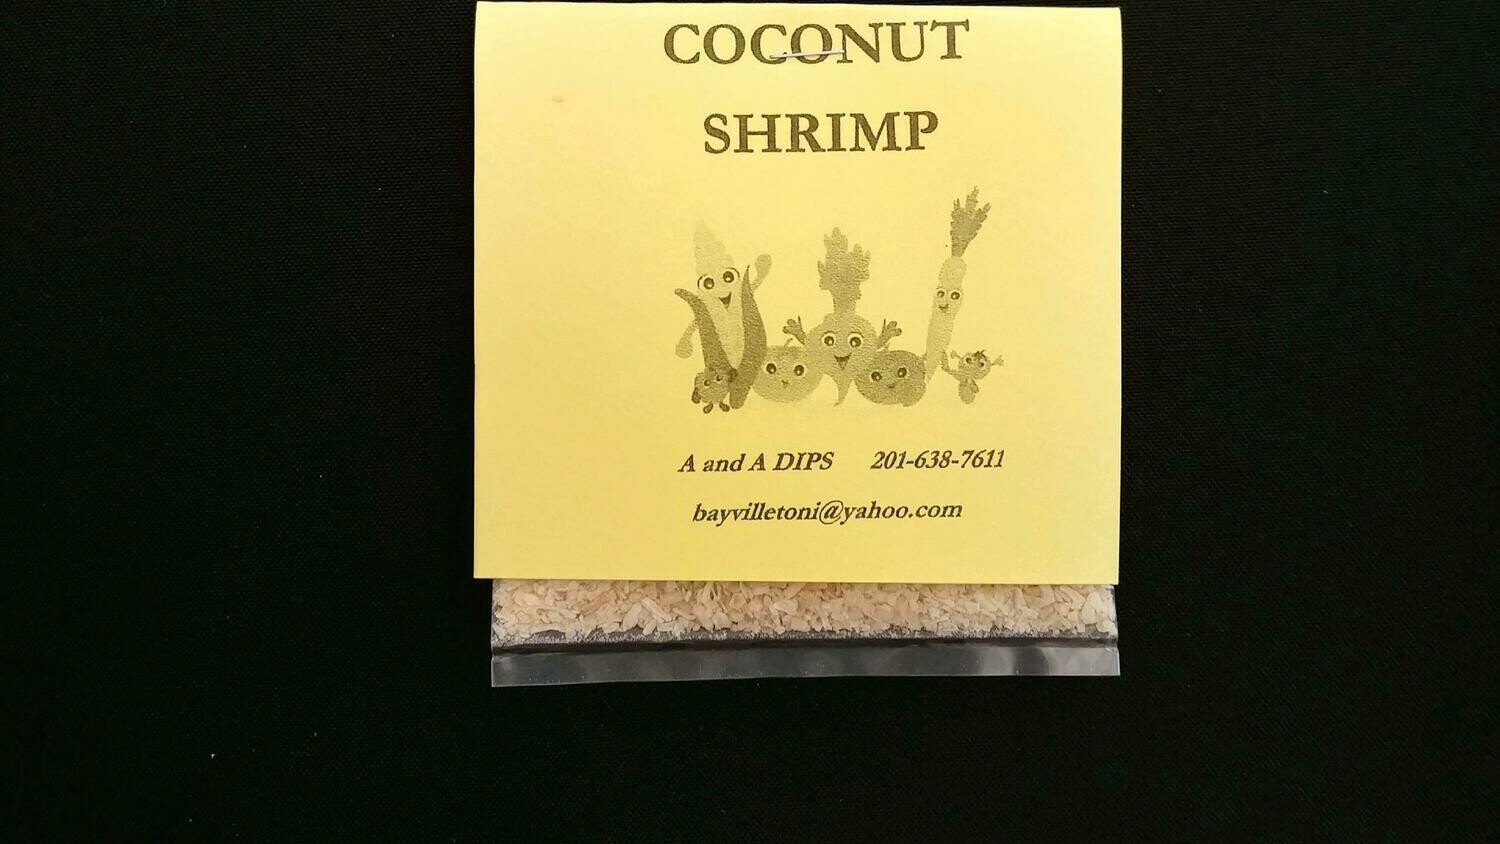 COCONUT SHRIMP